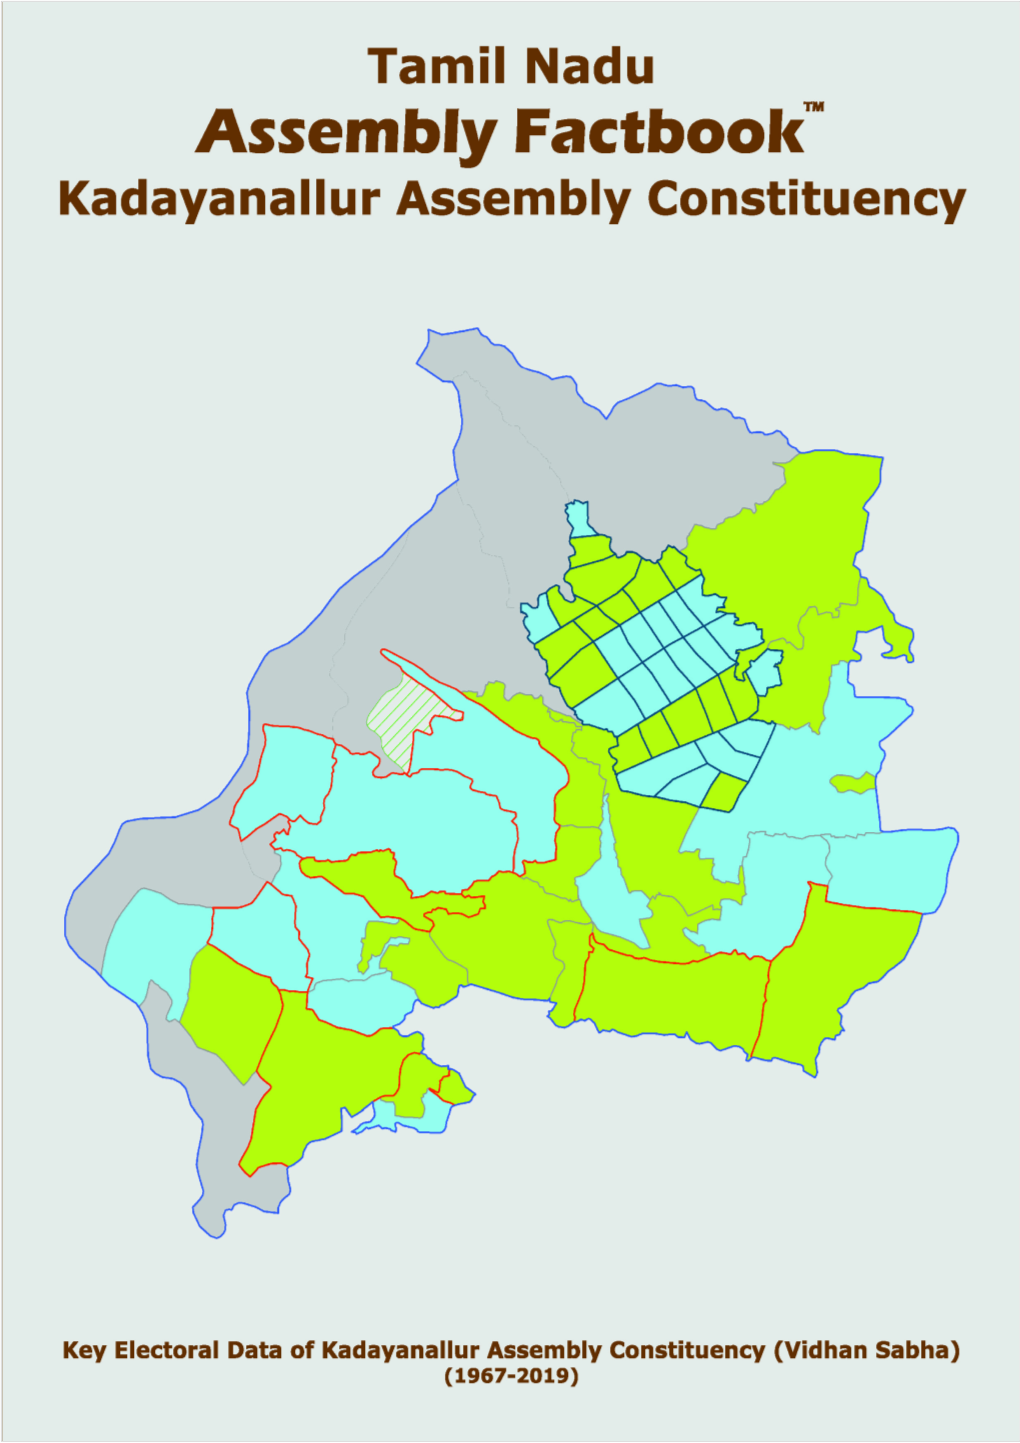 Kadayanallur Assembly Tamil Nadu Factbook